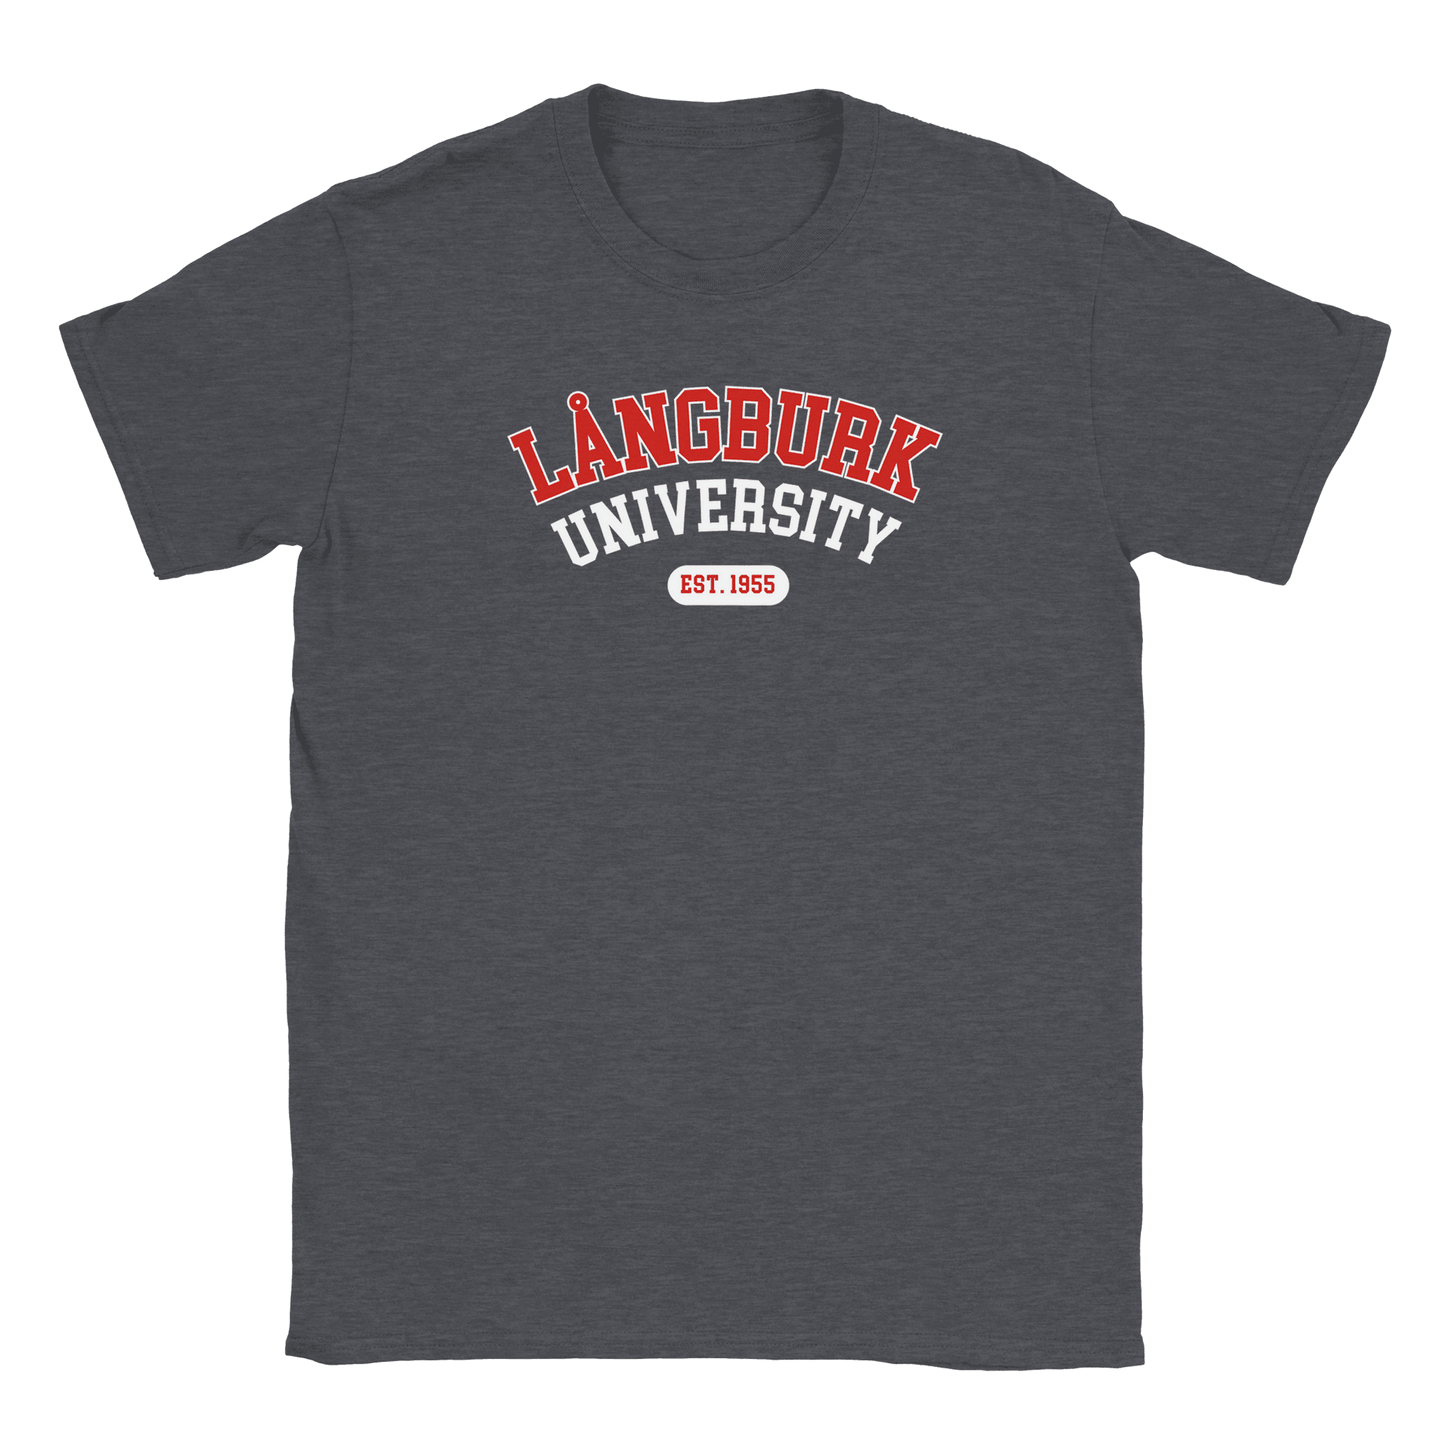 Långburk University Est. 1955 - T-shirt Mörkgrå